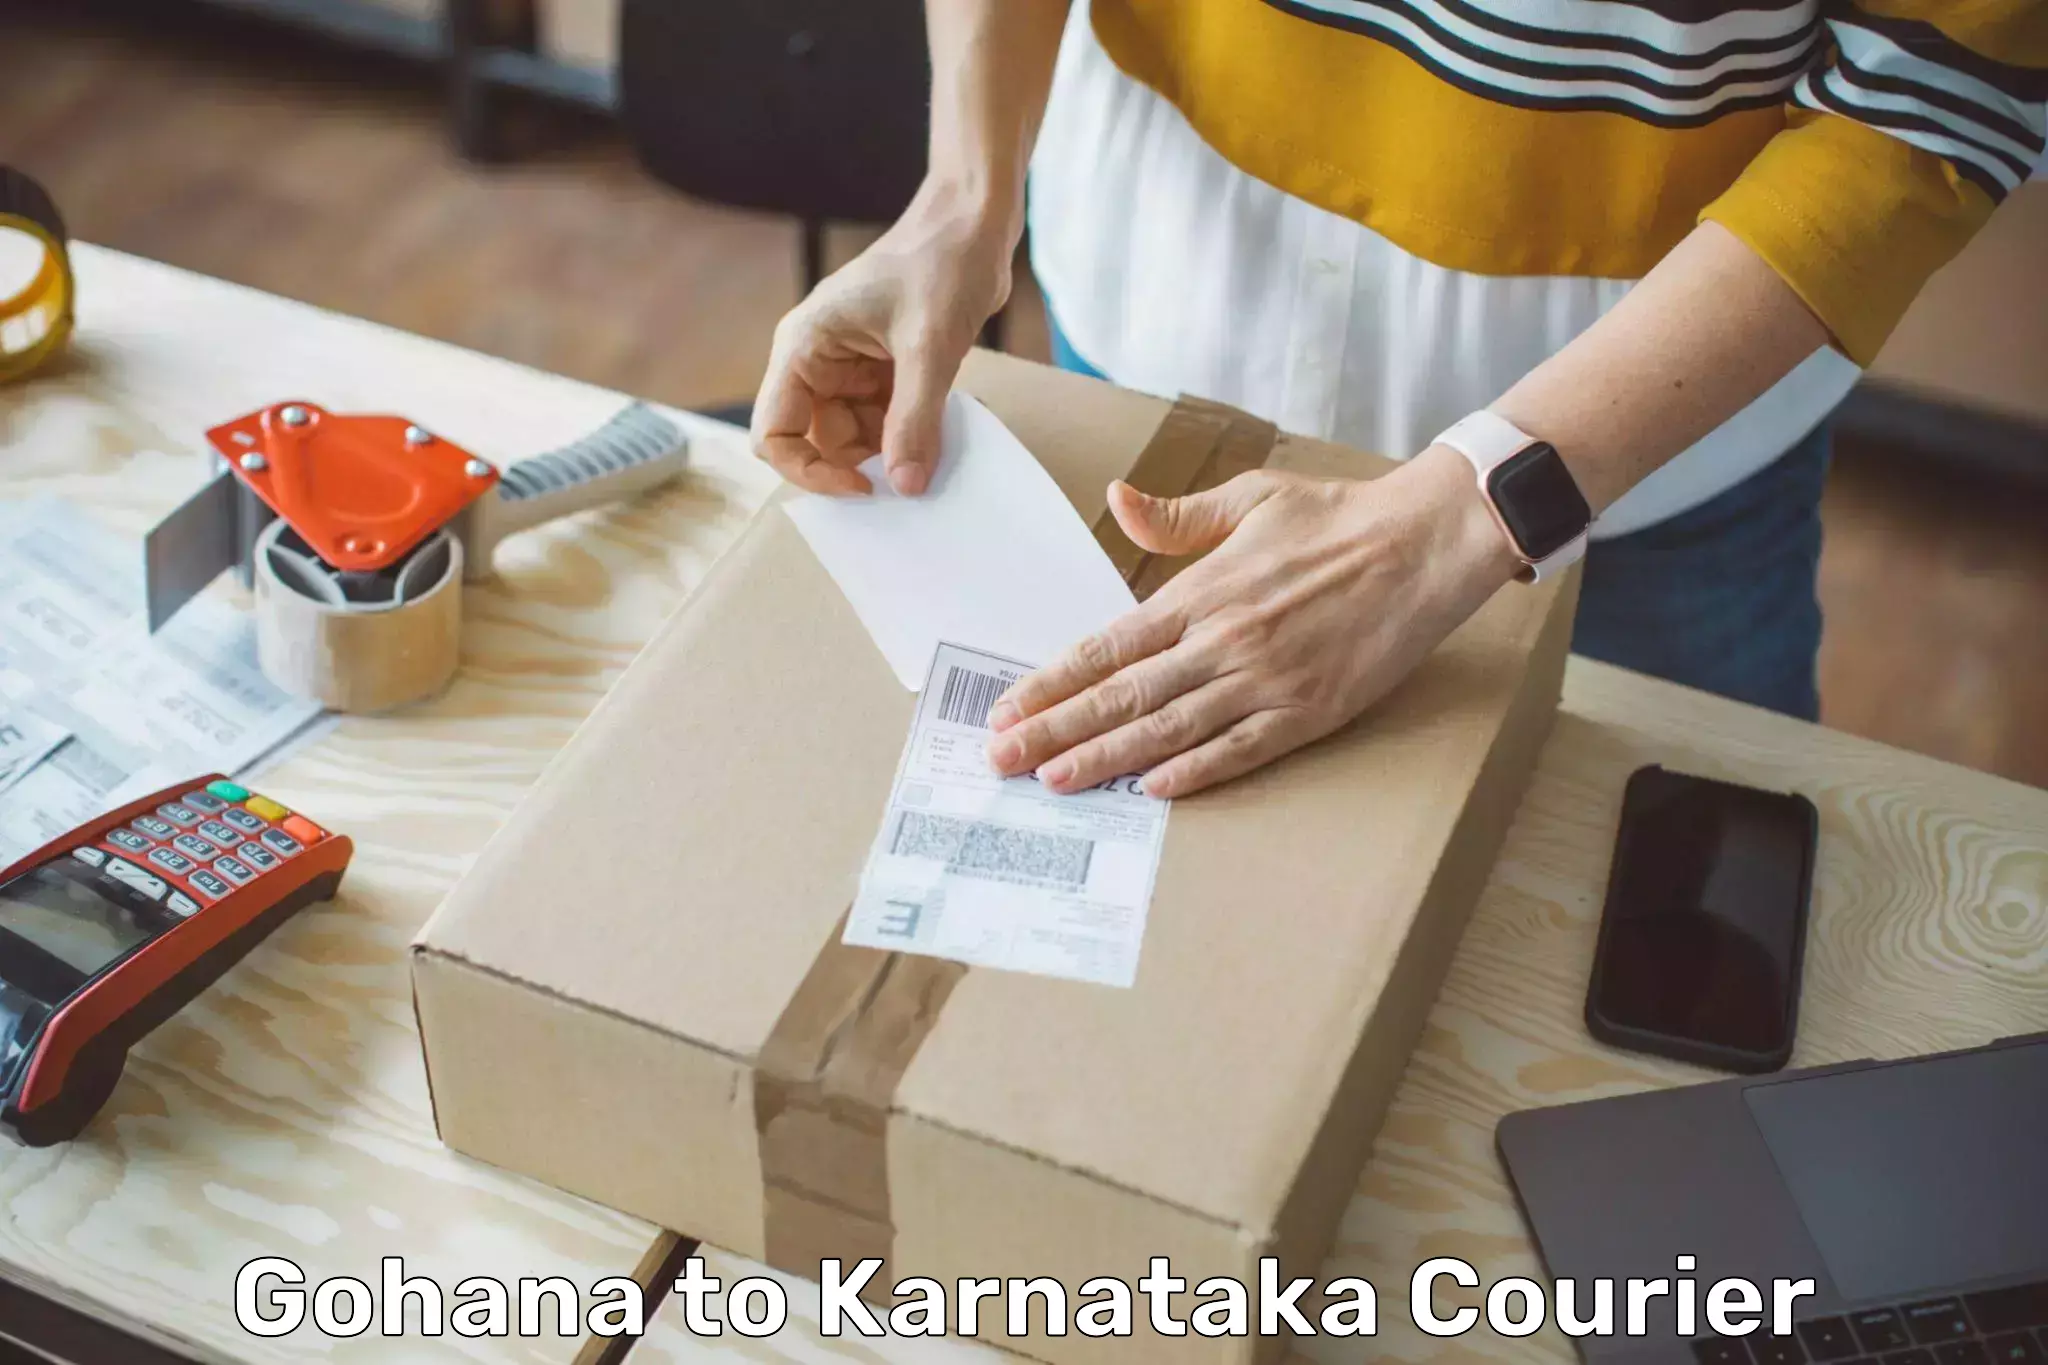 Reliable courier service in Gohana to Mannaekhelli